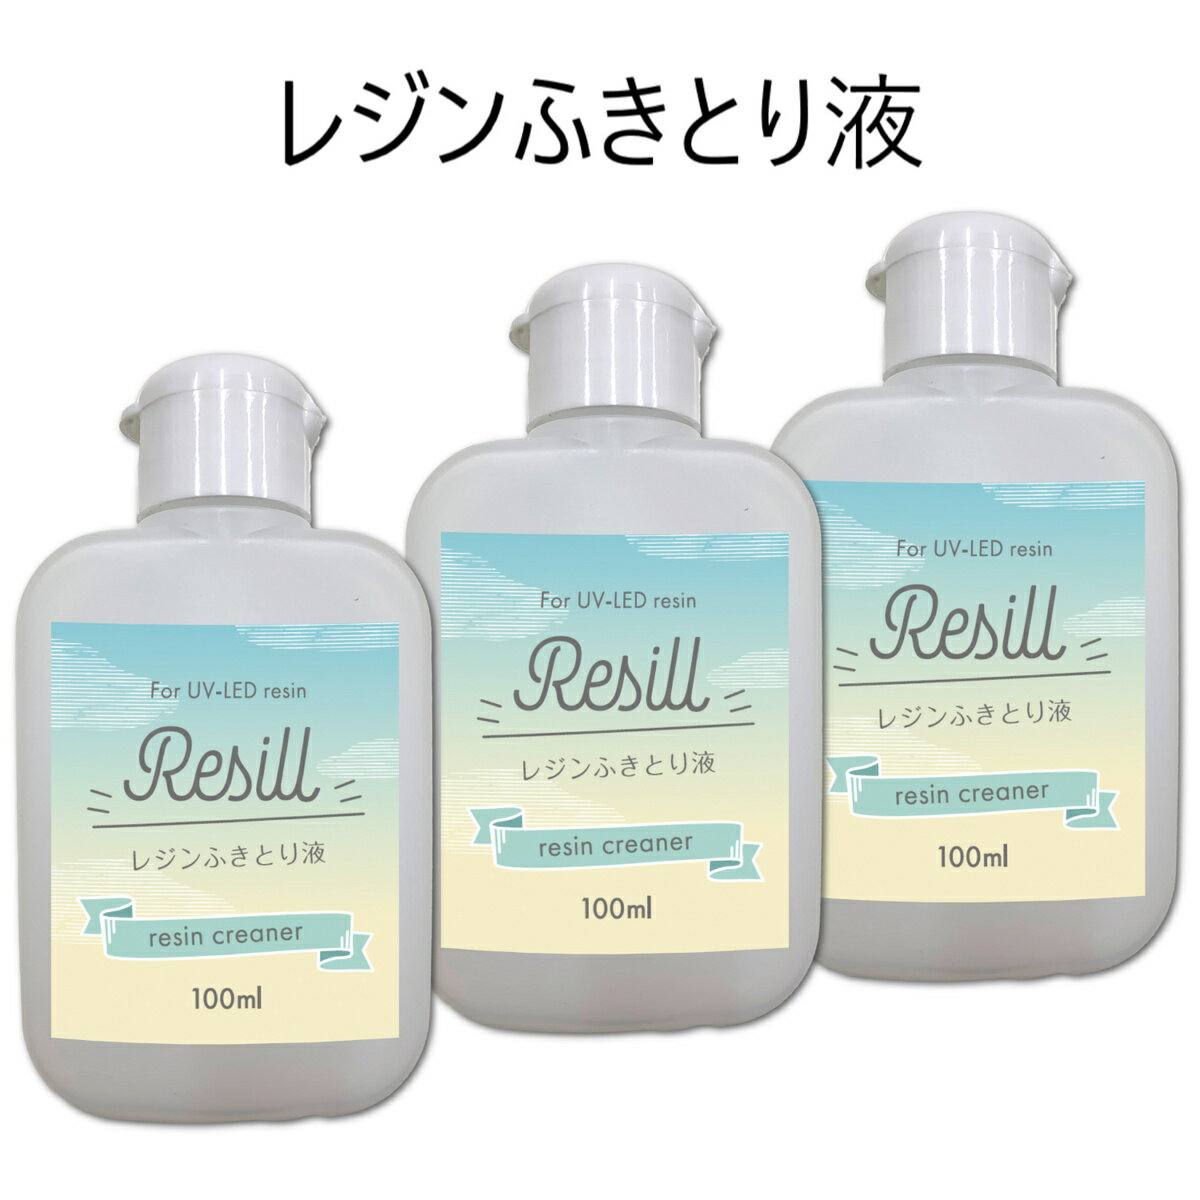 Resill レジンふきとり液 レジン用クリーナー 100ml ×3 シリコン型・用具のお手入れに 日本製